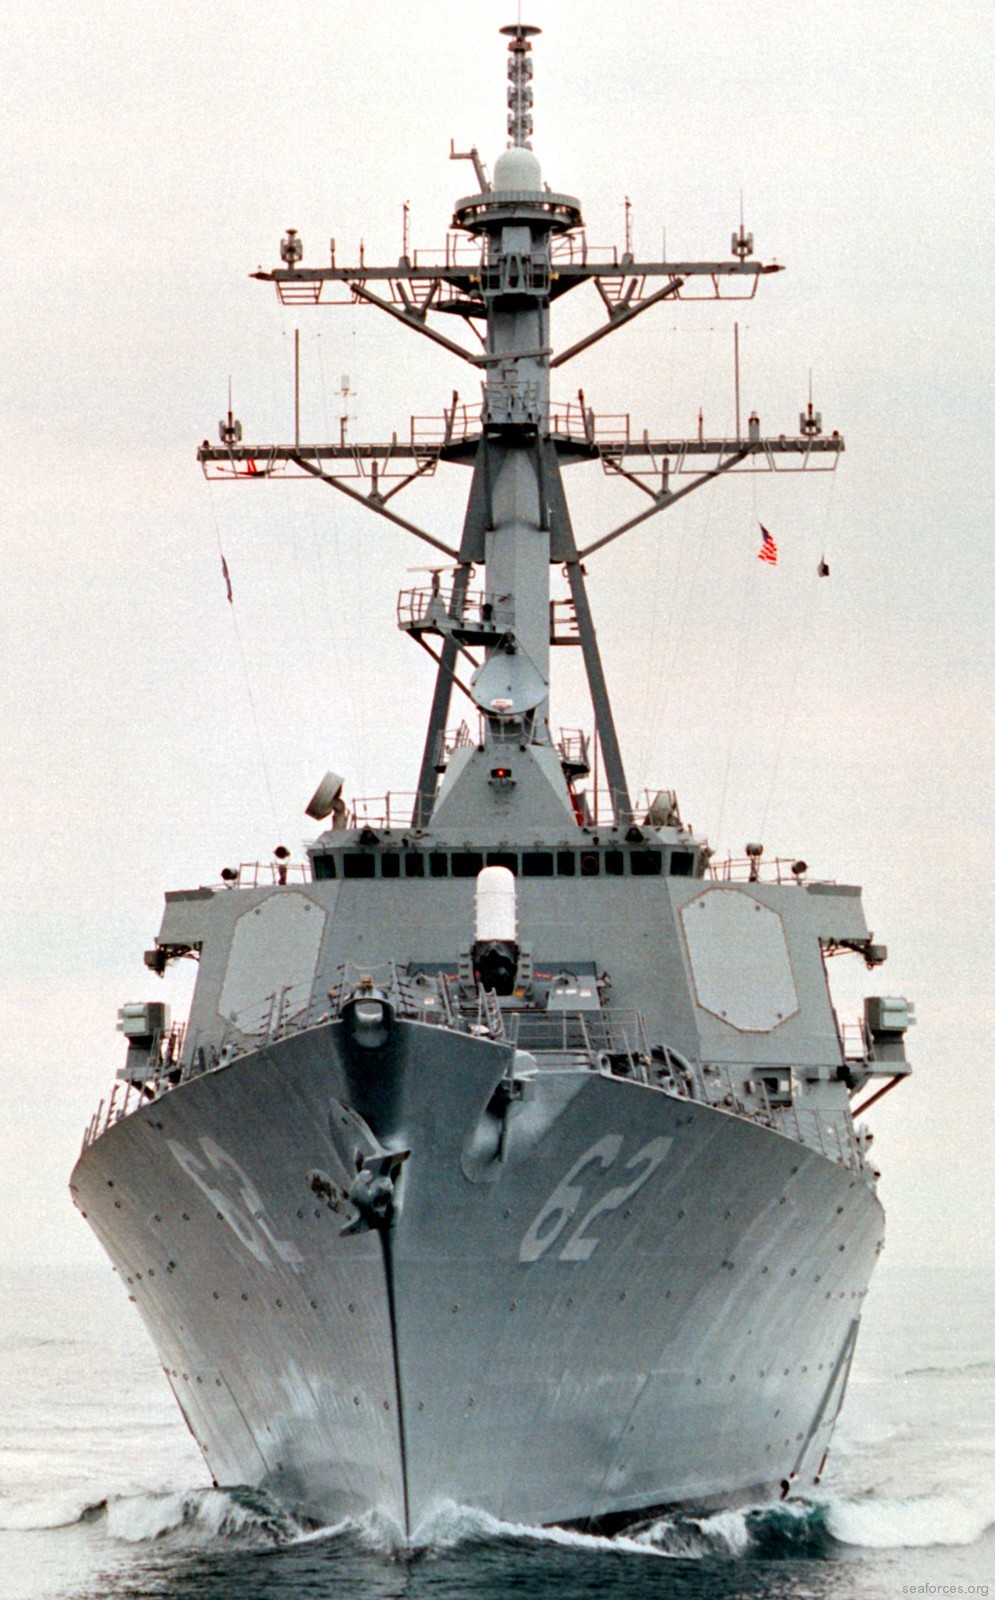 ddg-62 uss fitzgerald guided missile destroyer 1995 113 sea trials bath iron works maine